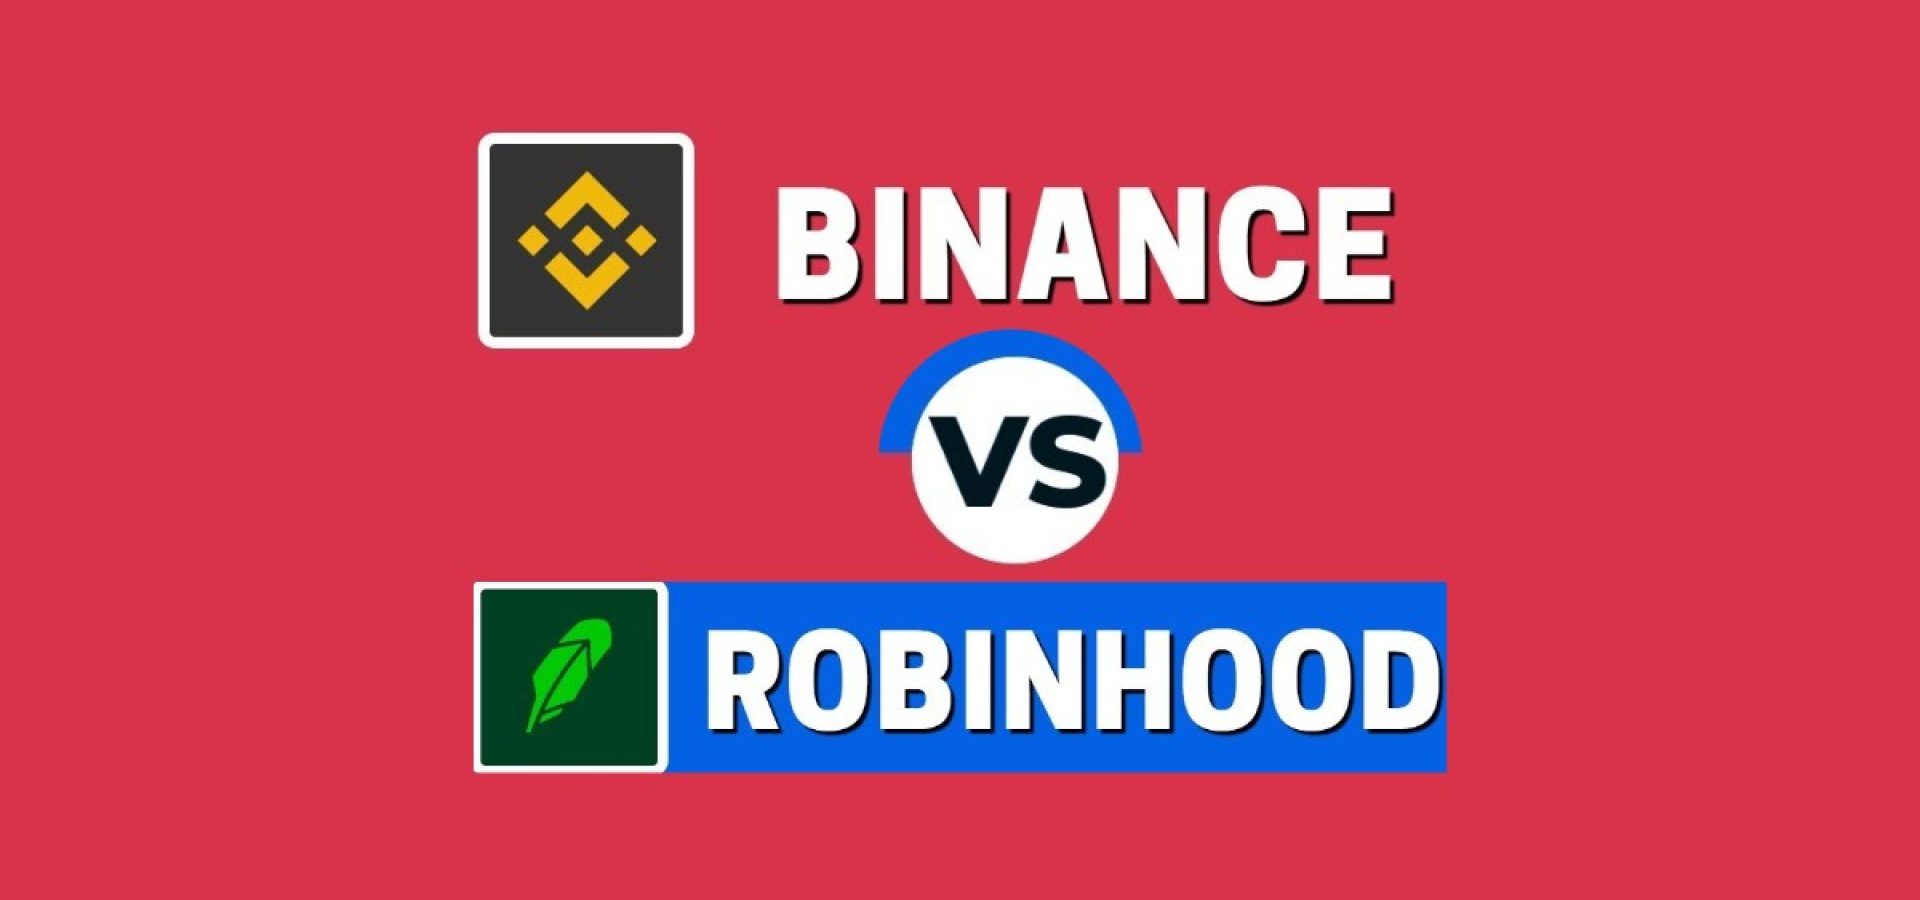 Binance or Robinhood - side by side comparison